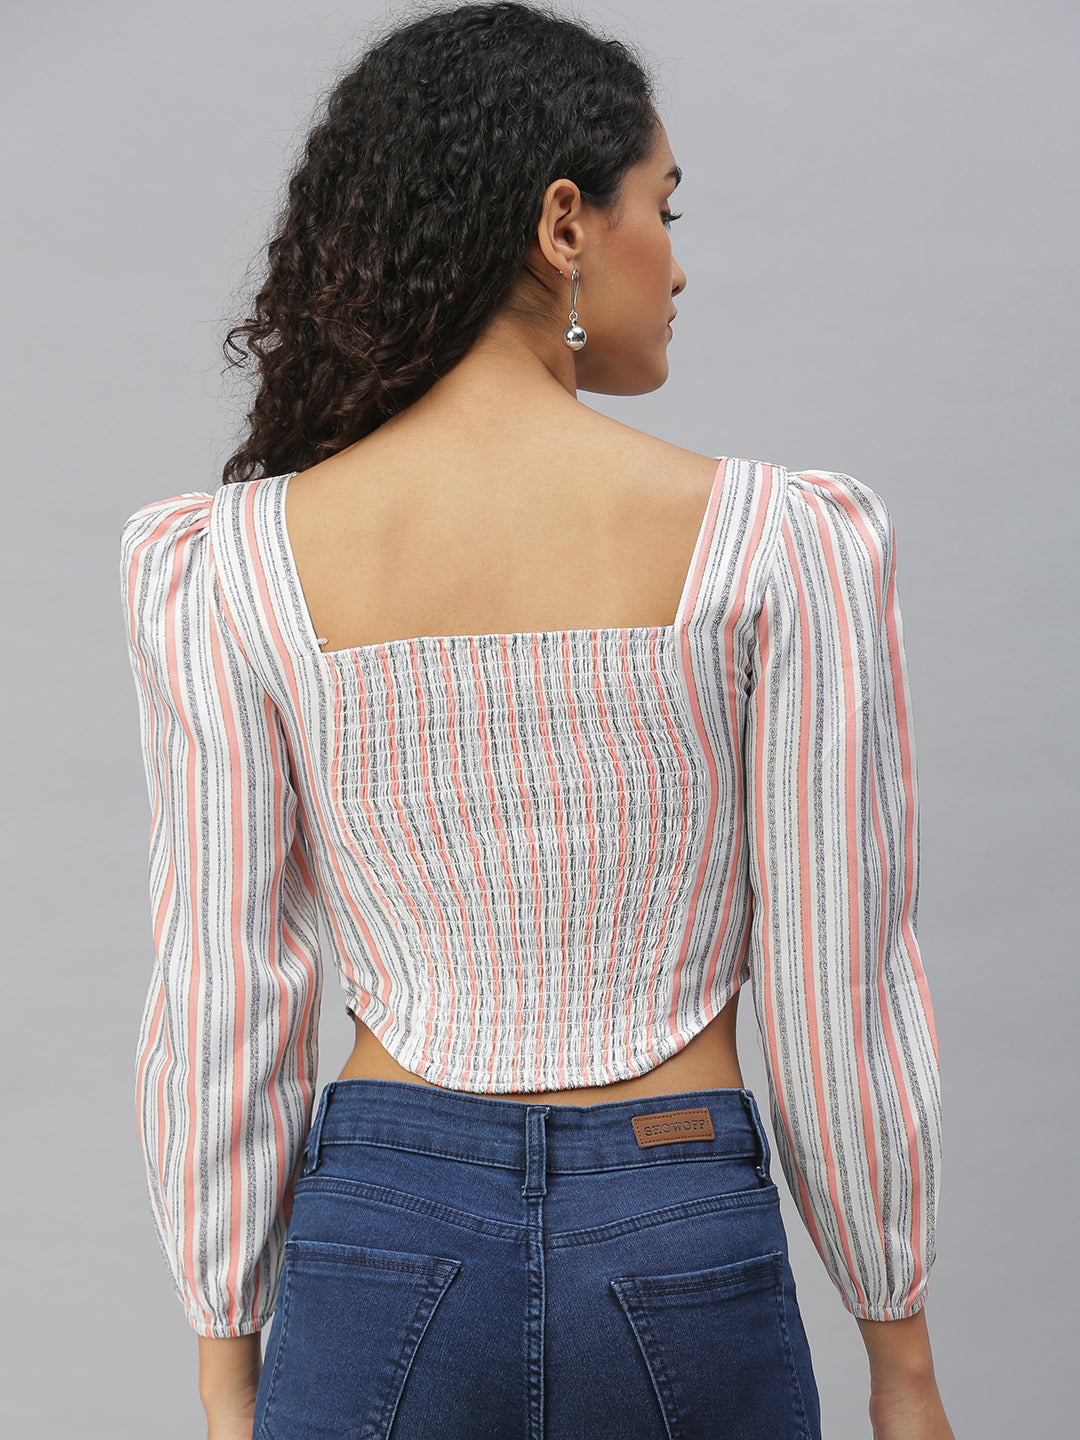 Women's Peach Striped Crop Tops